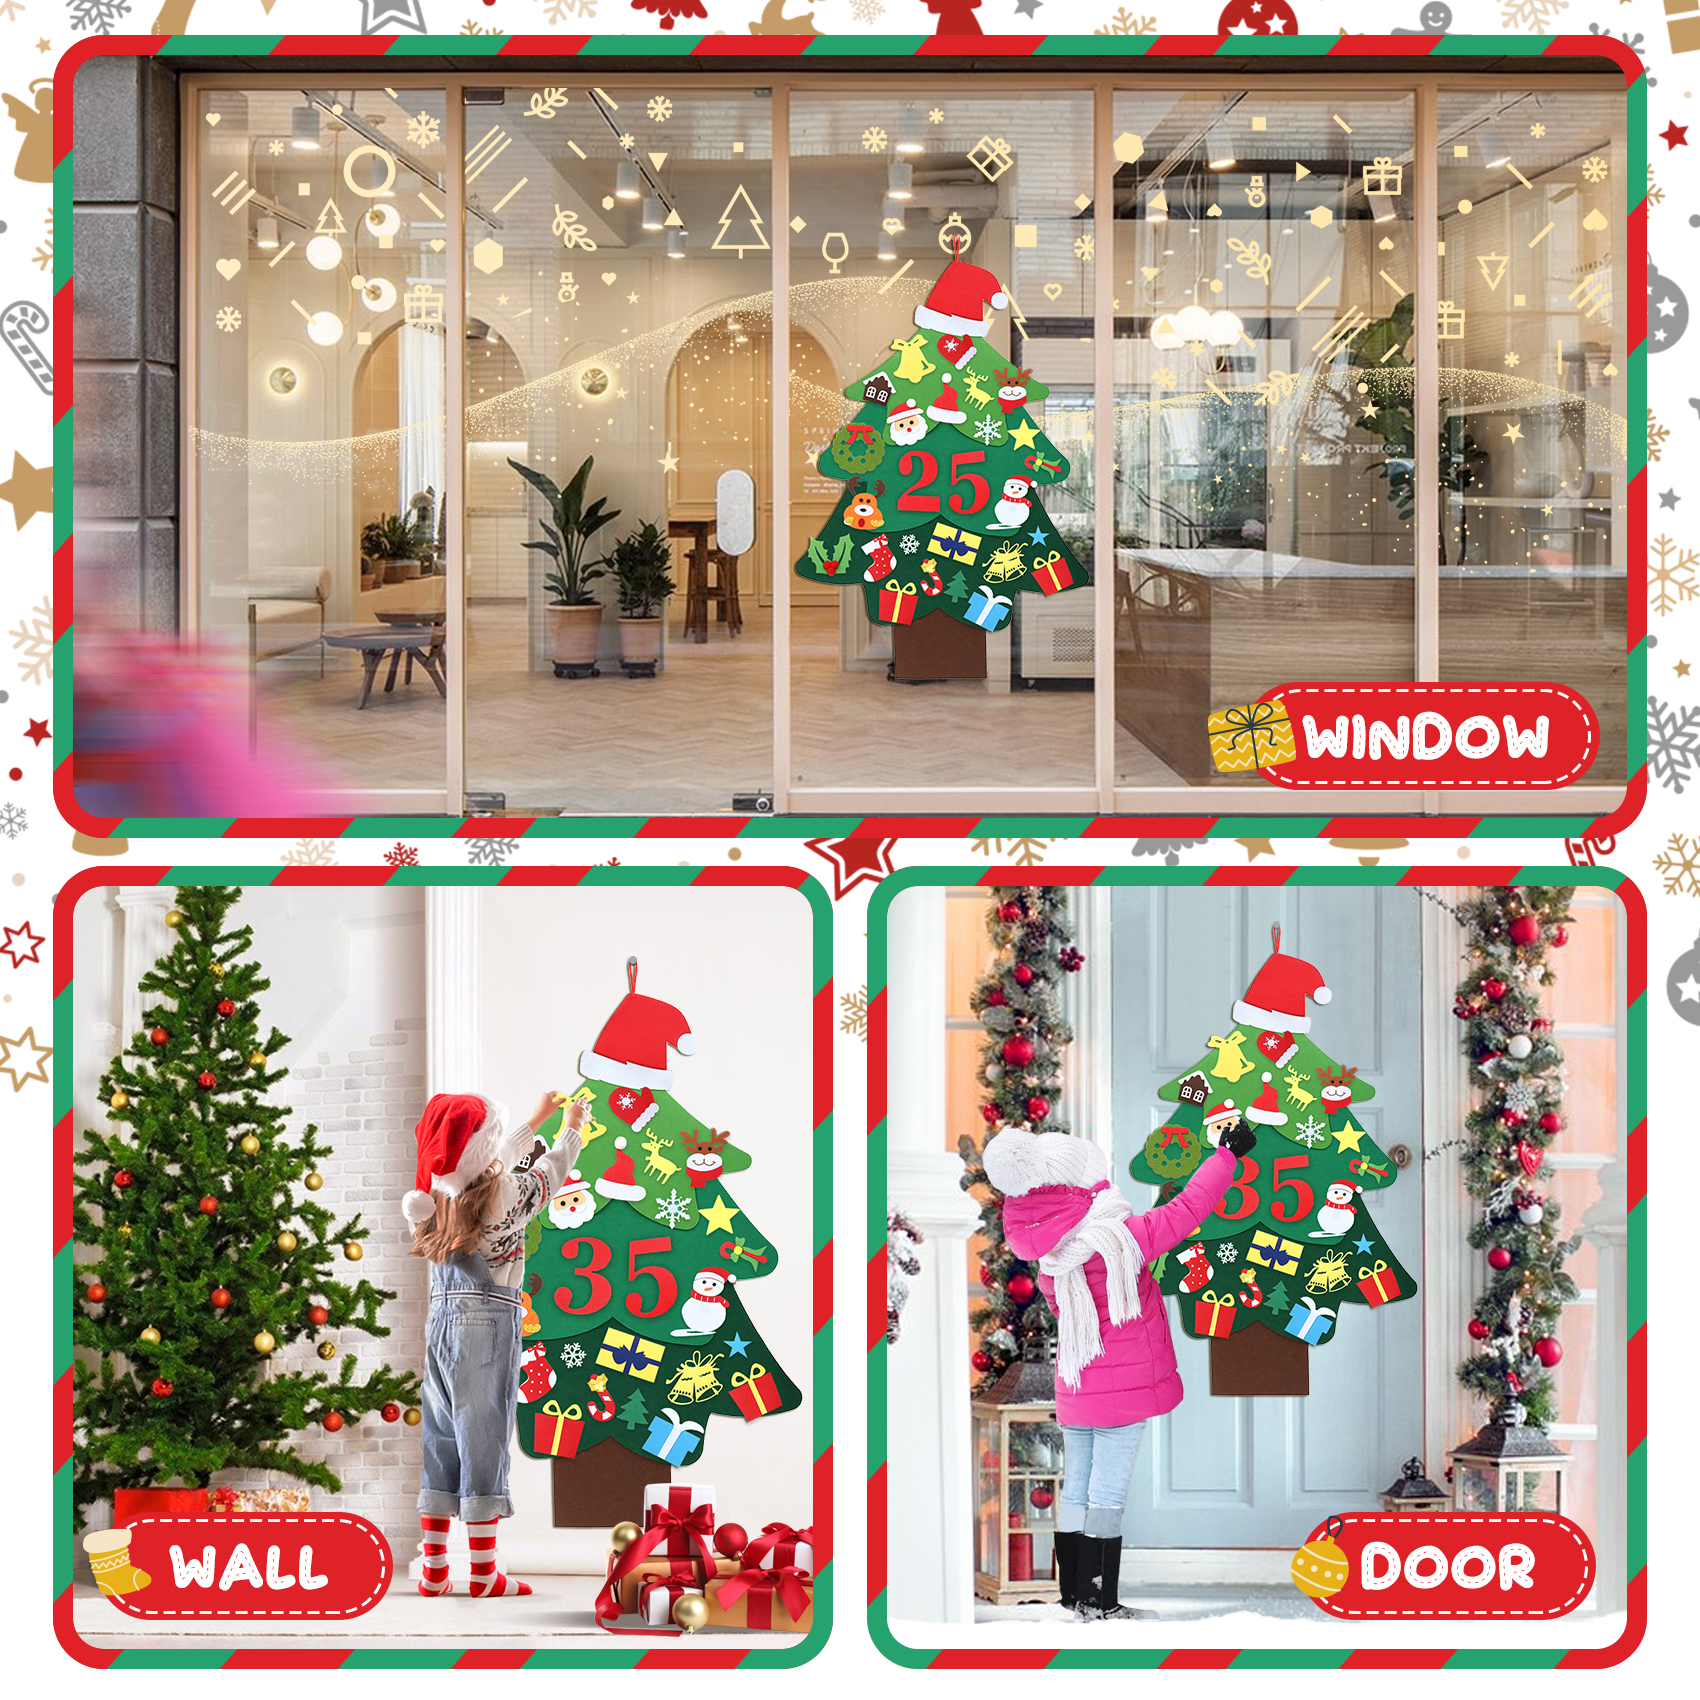 JETEVEN-DIY-Felt-Christmas-Tree-for-Kids-Wall-Christmas-Decorations-Christmas-Countdown-Advent-Calen-1898986-5